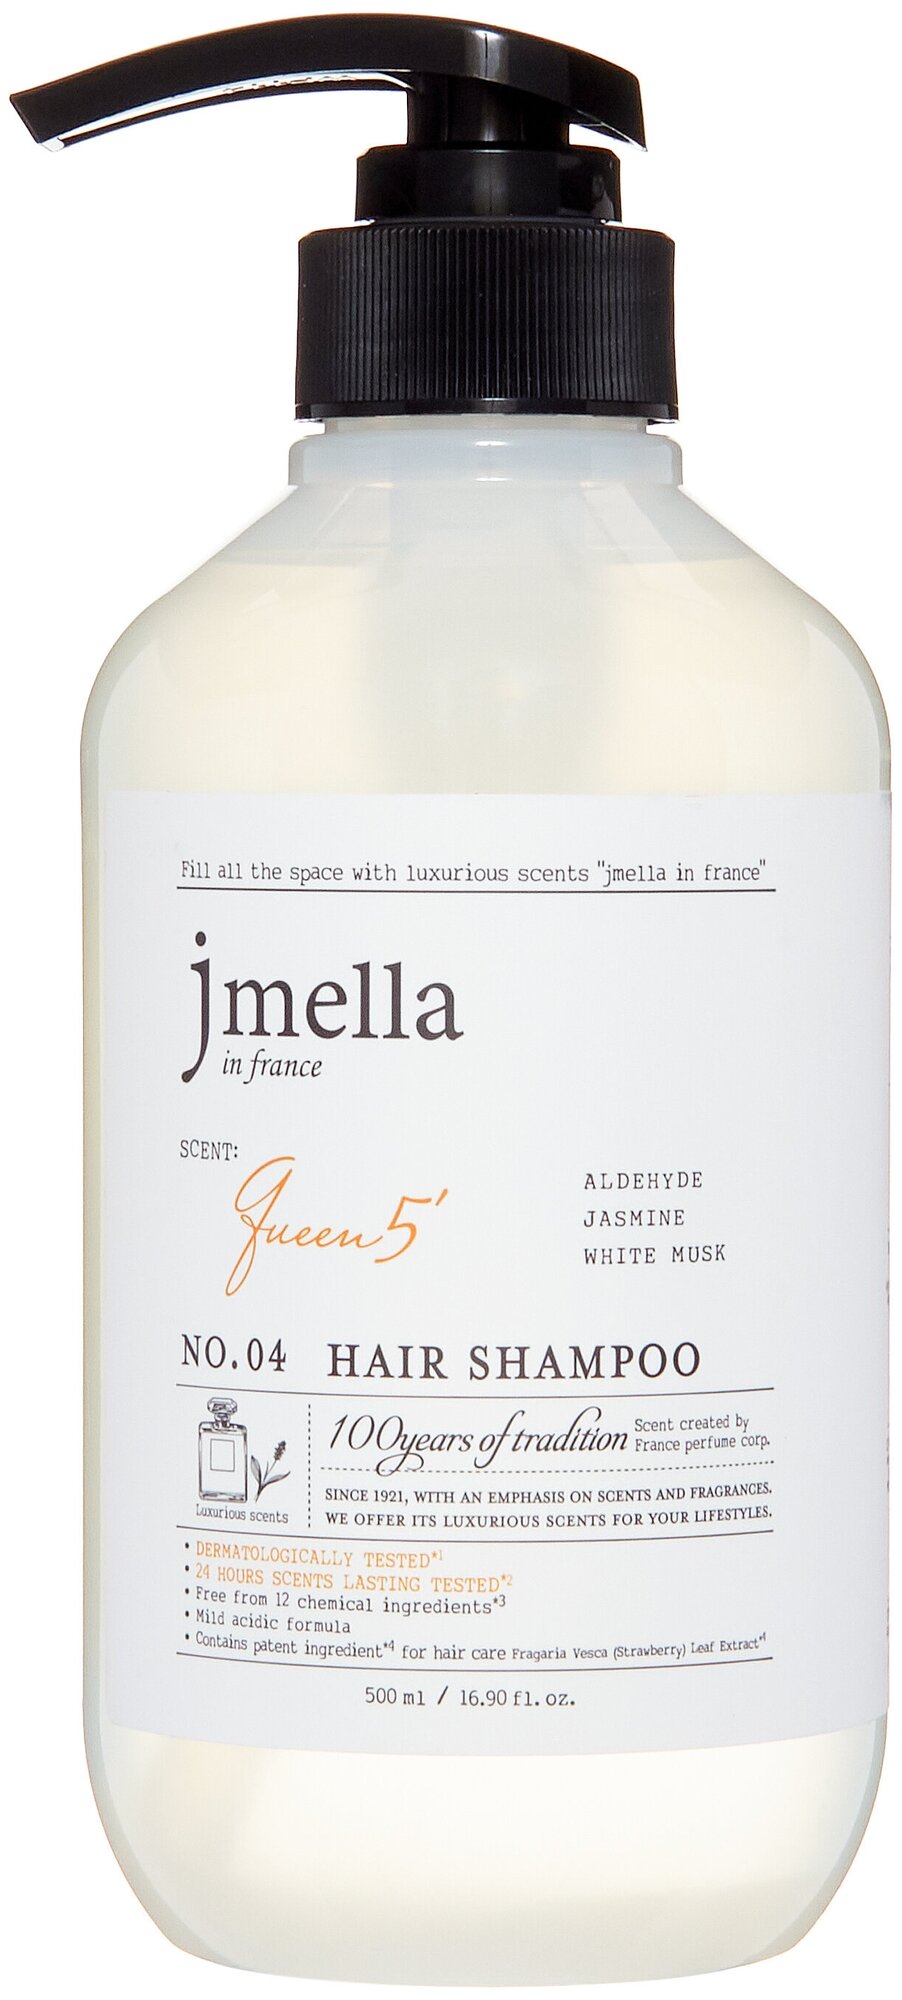 JMELLA IN FRANCE QUEEN 5' HAIR SHAMPOO Шампунь для волос "Альдегид, жасмин, белый мускус"